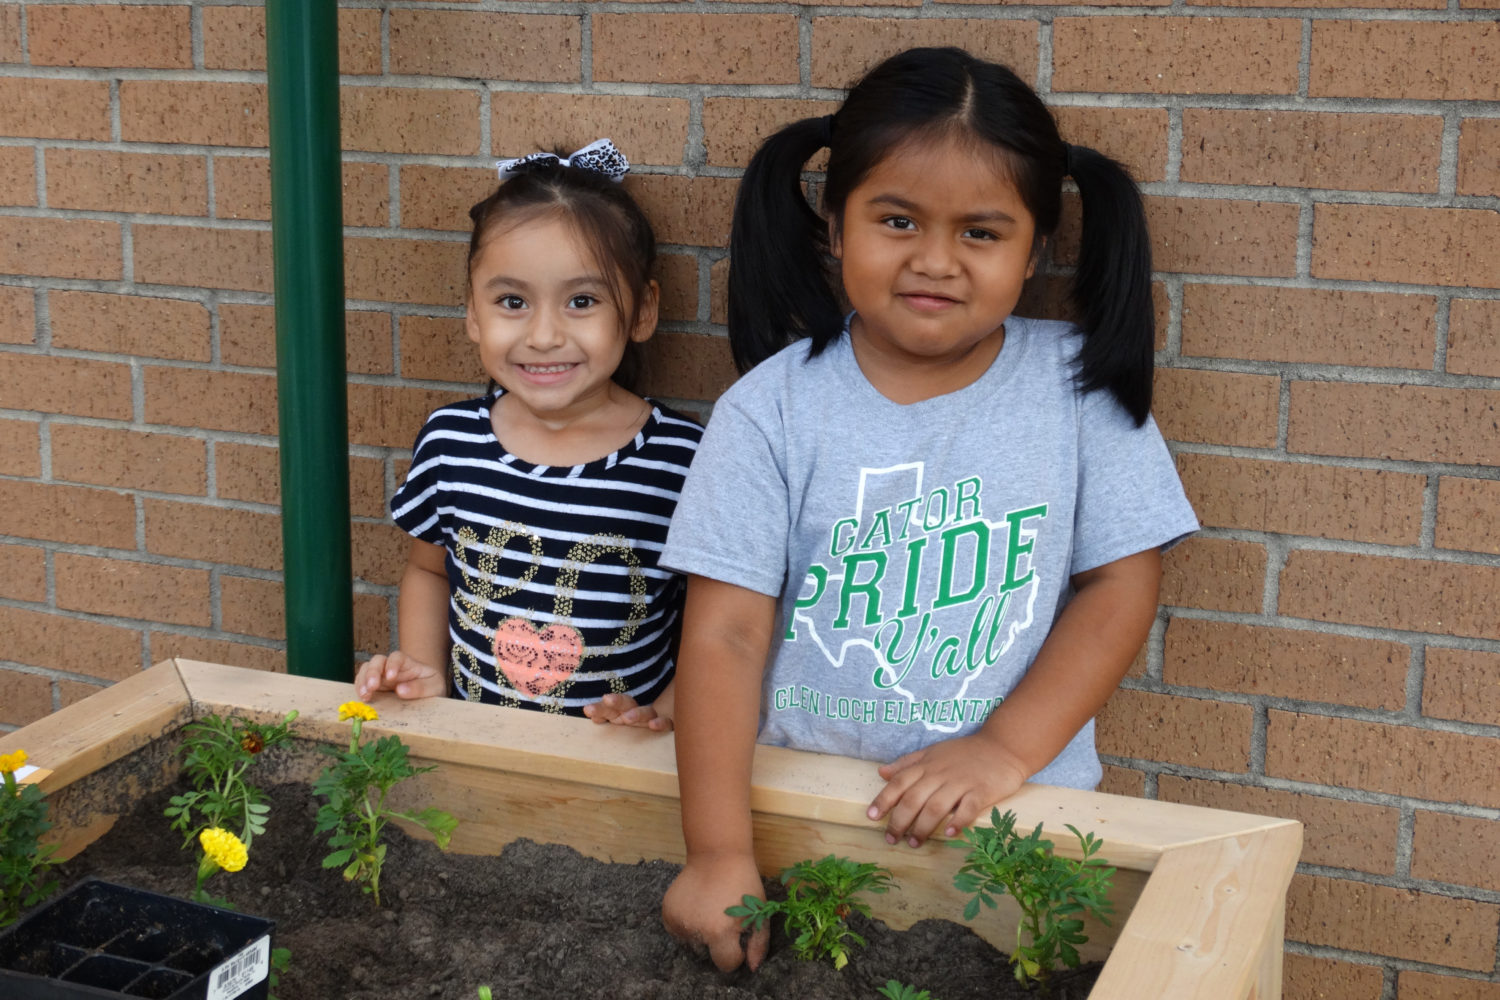 Students at Glen Loch Elementary enjoy spending time in the garden.